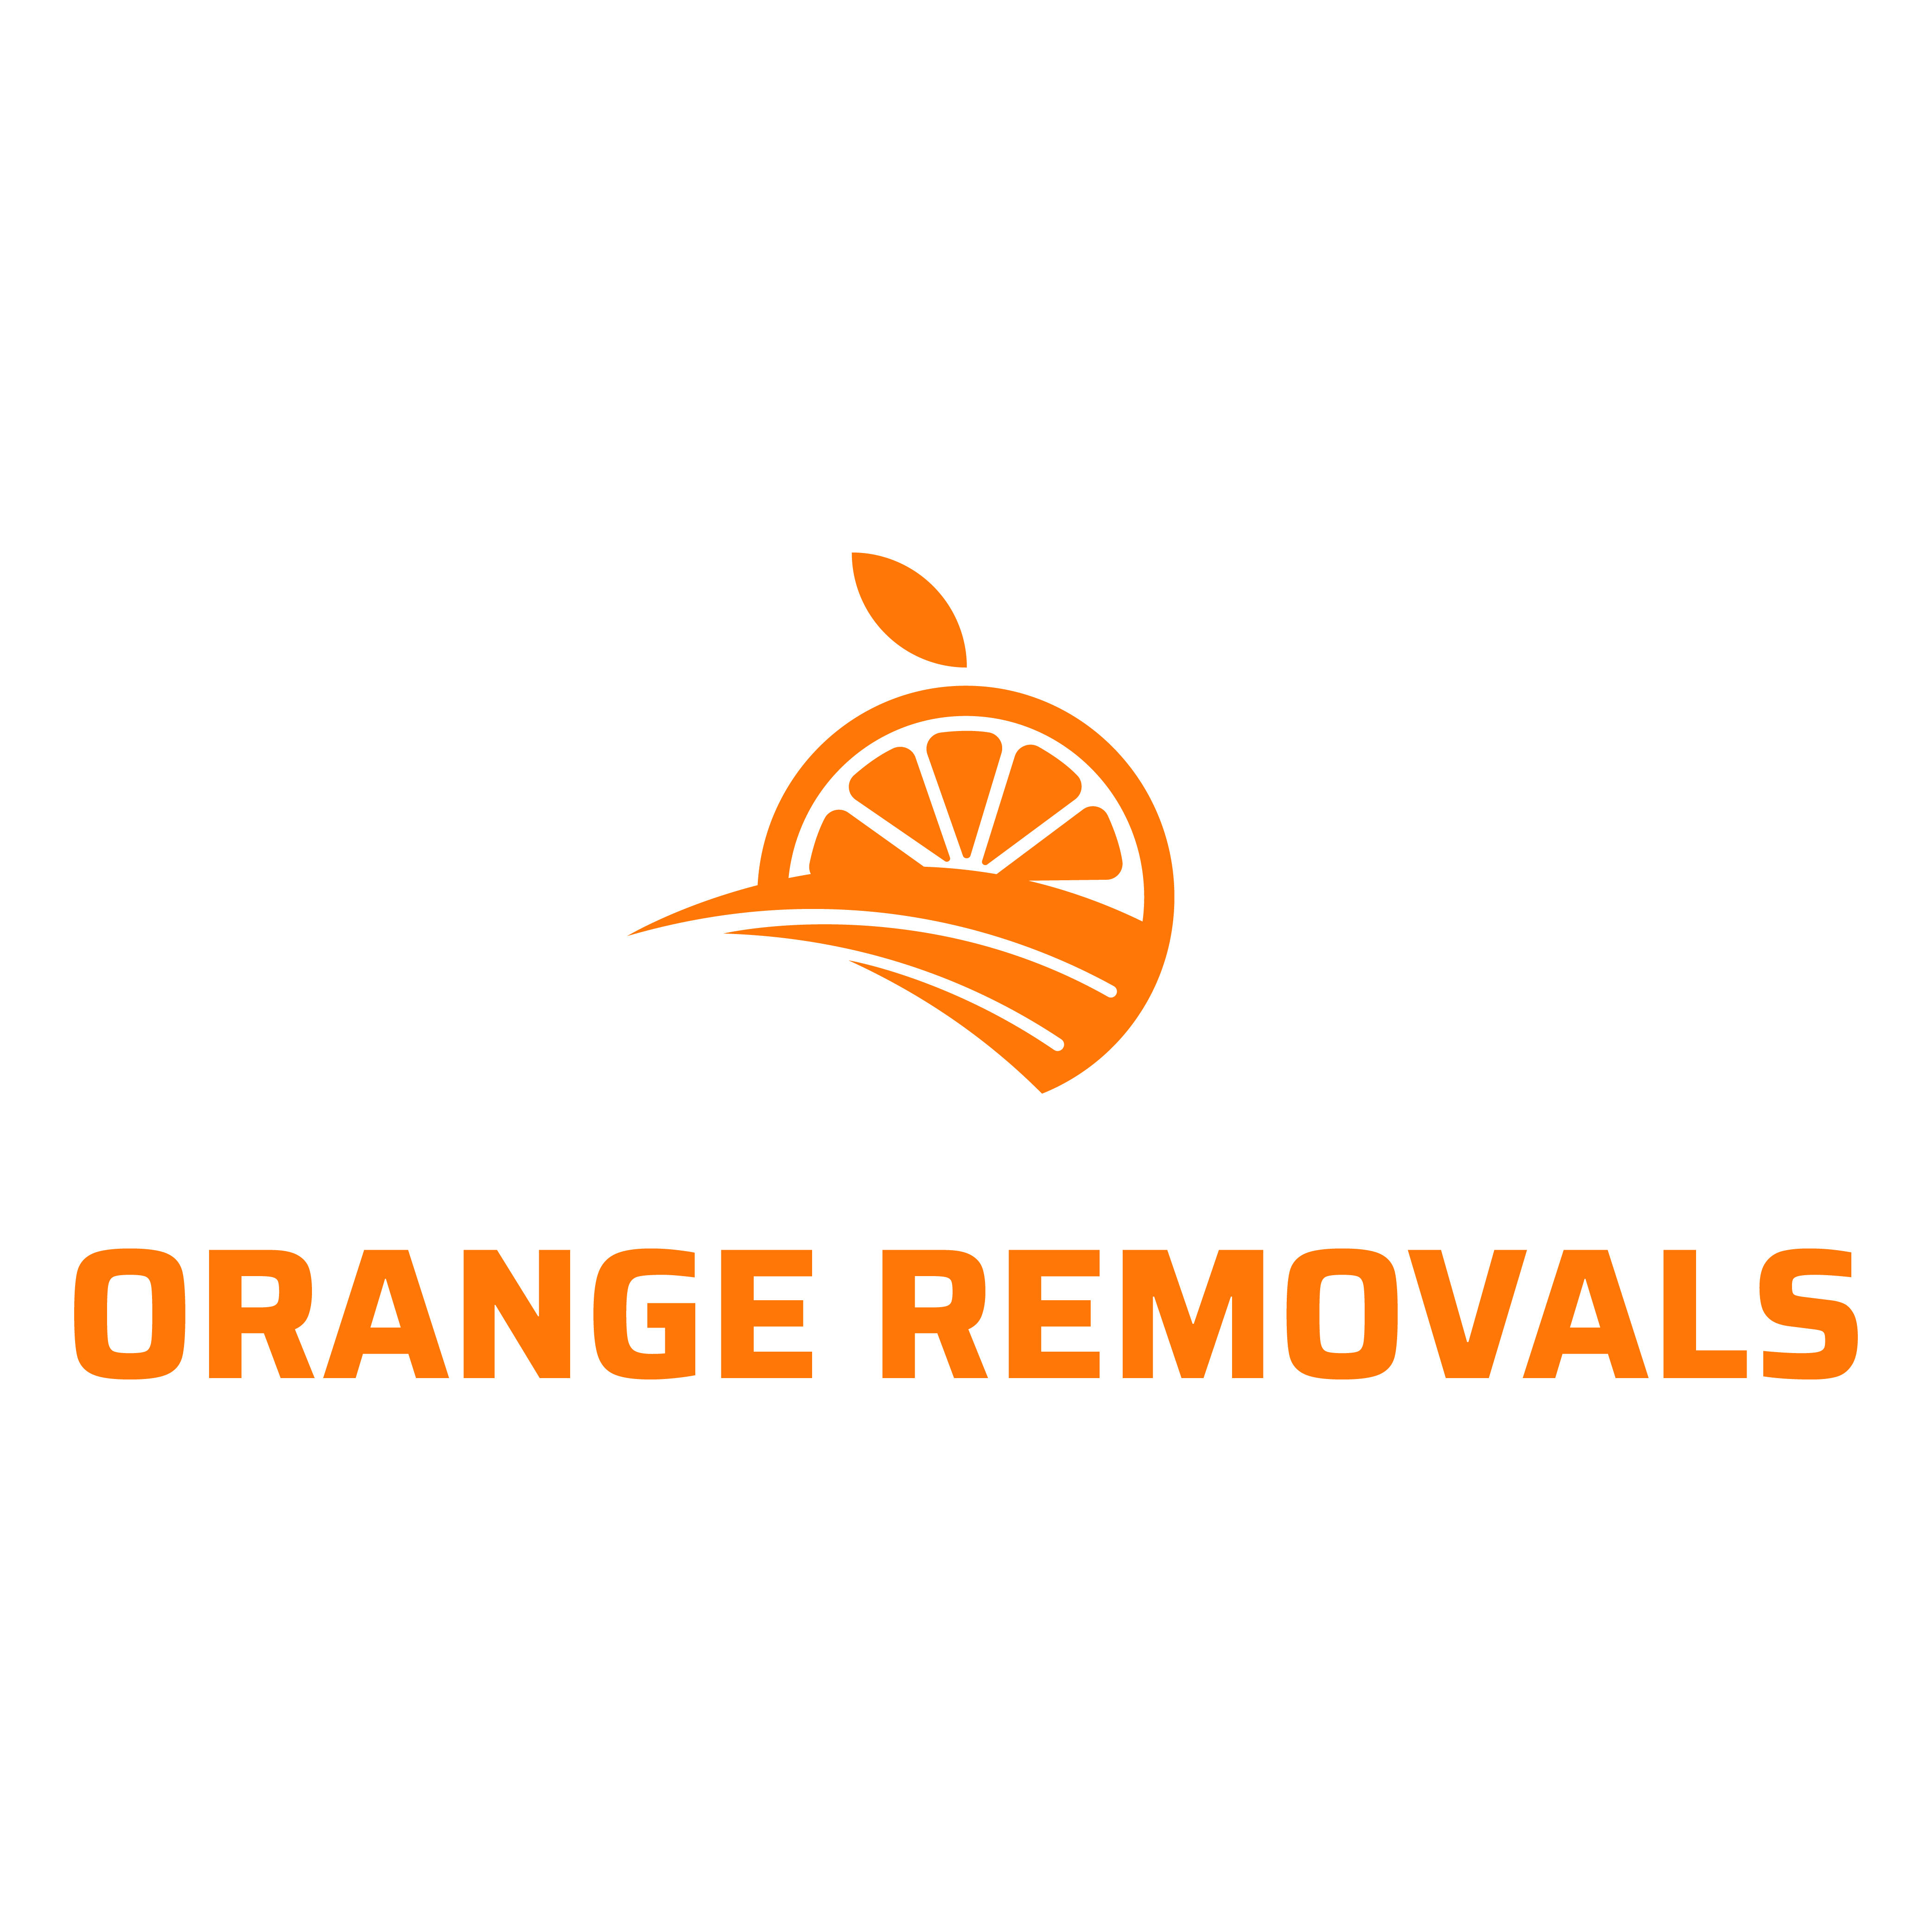 Orange removals -logo